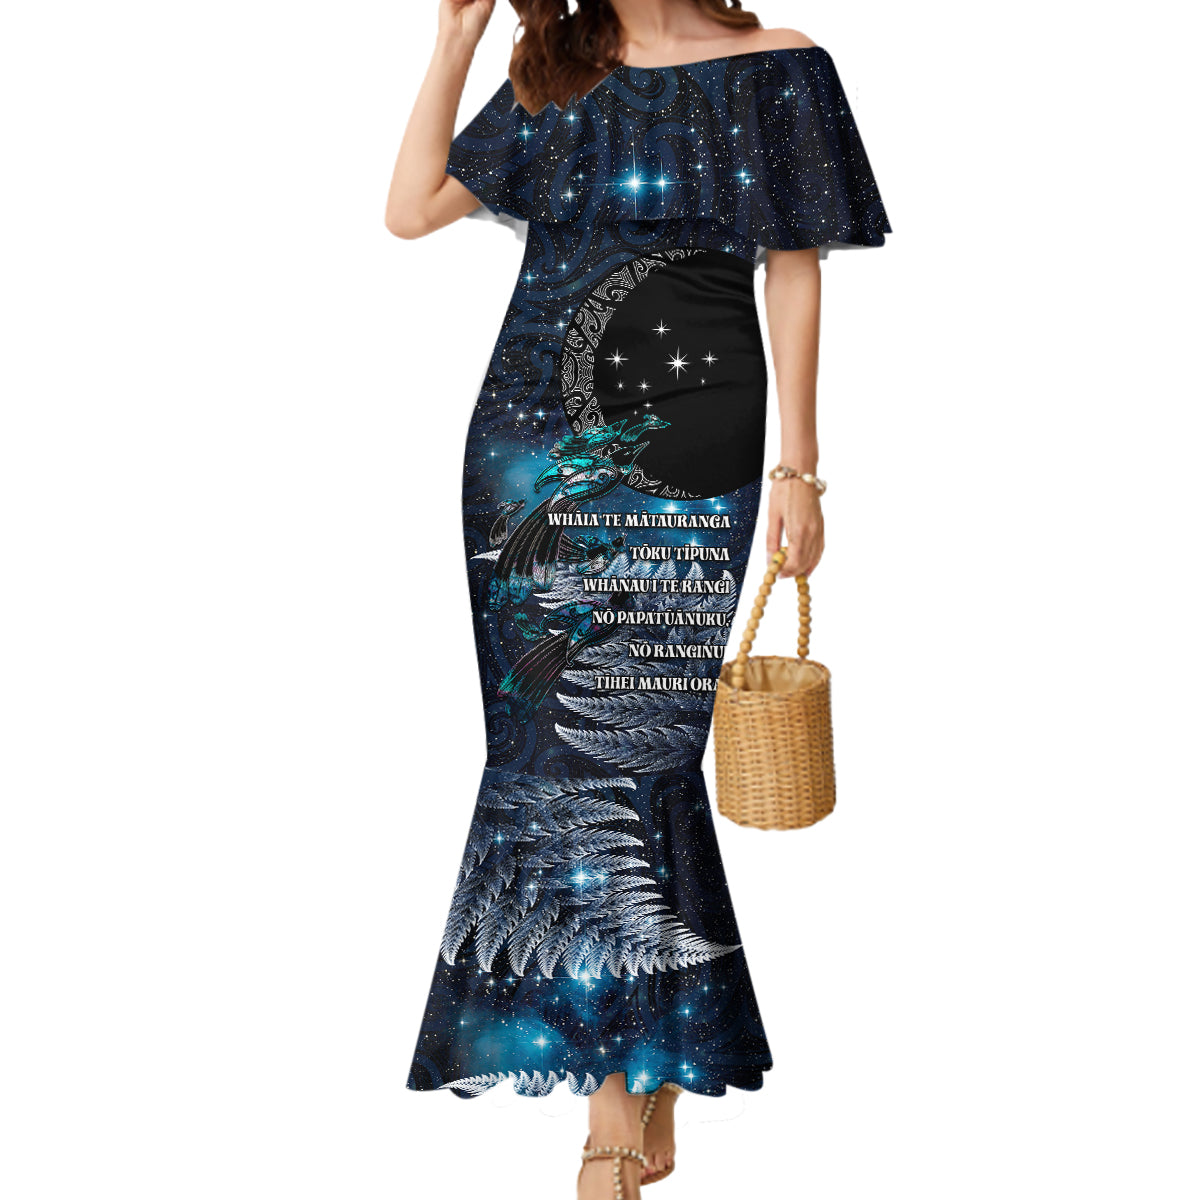 New Zealand Tui Bird Mermaid Dress Matariki Poetry Pattern Galaxy Style